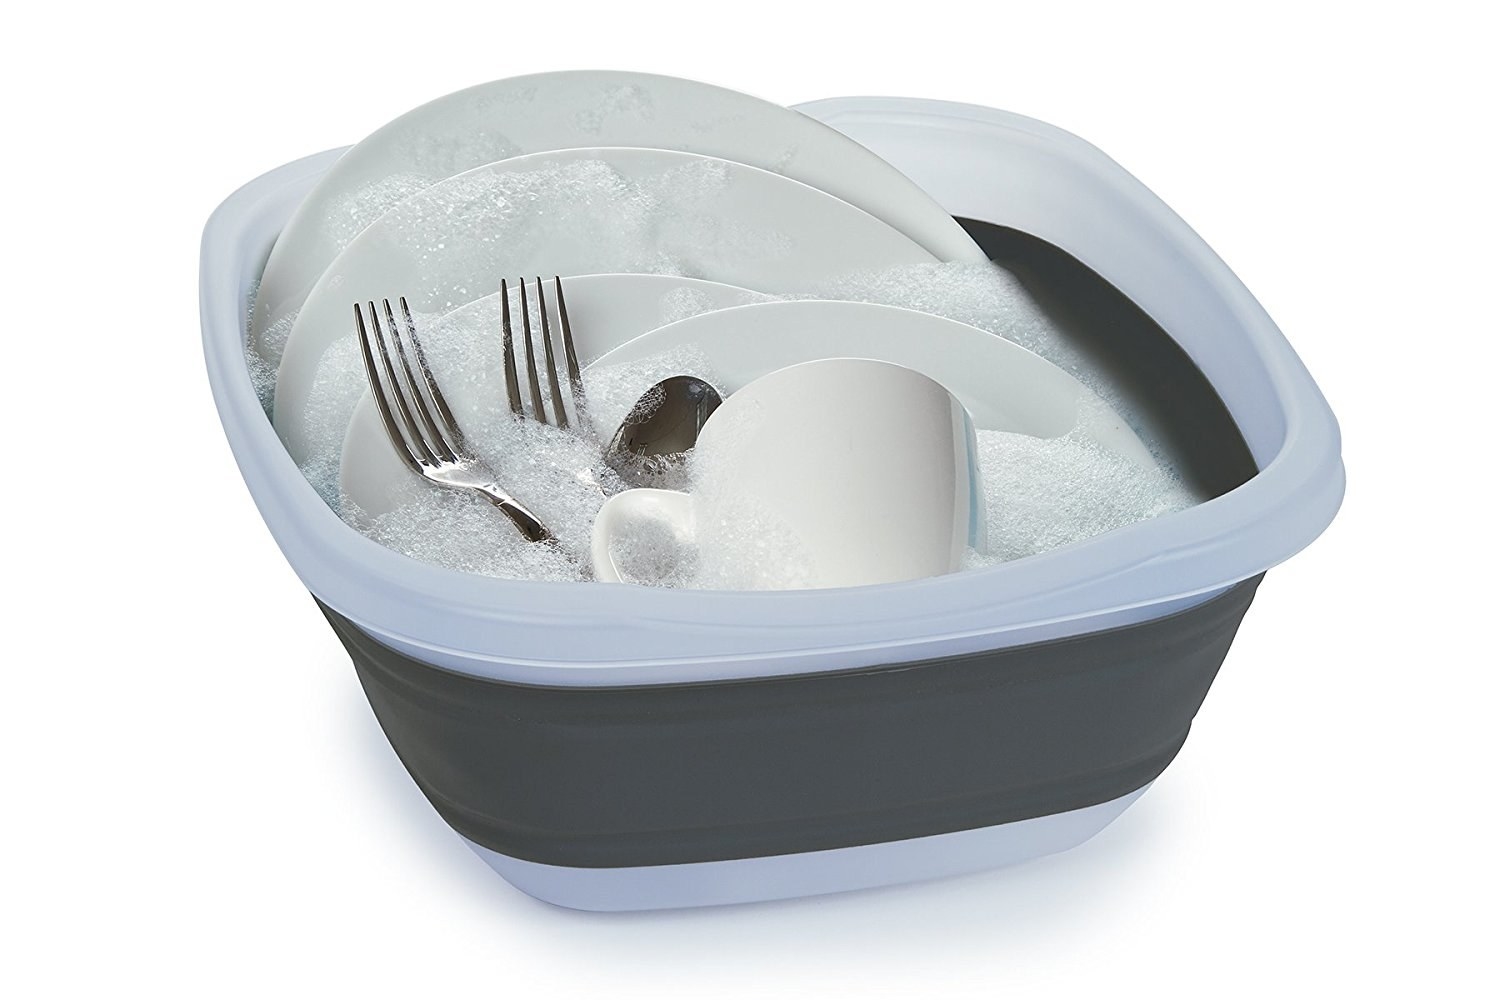 plastic vs stainless steel dishwasher tub